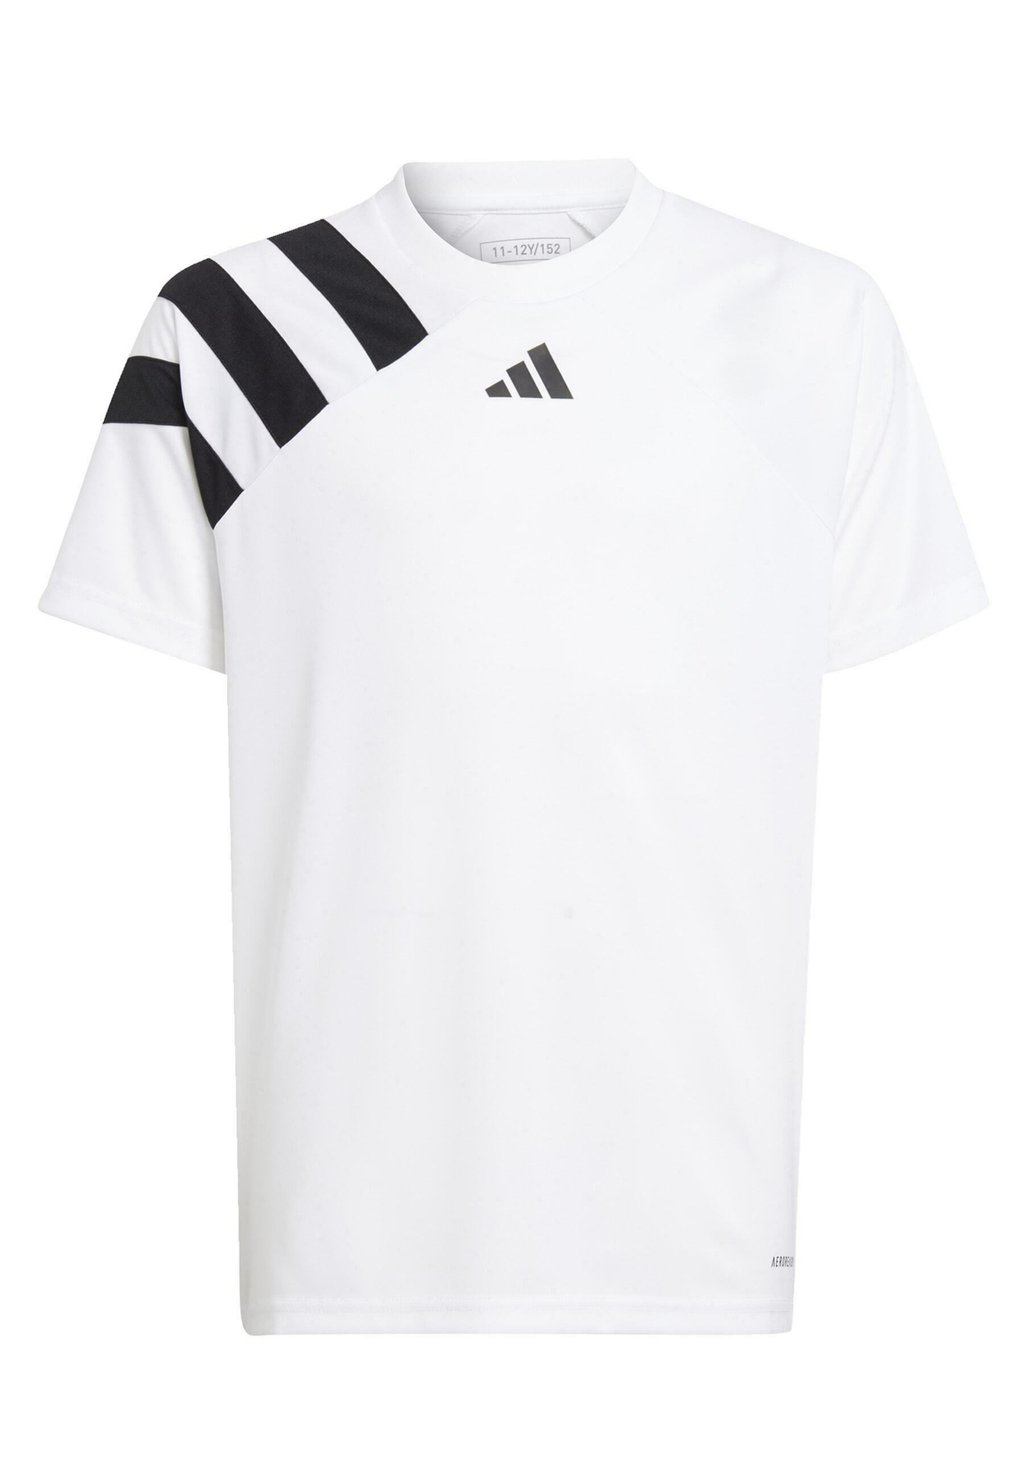 Футболка с принтом Fortore 23 Adidas, цвет white black цена и фото